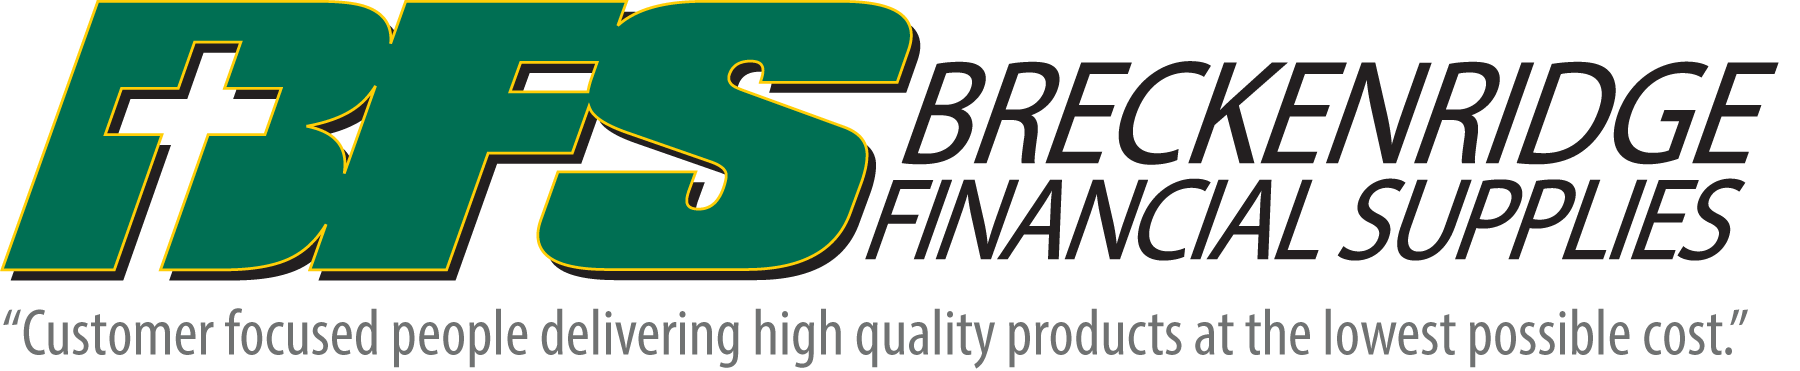 Breckenridge Financial Supplies's Logo